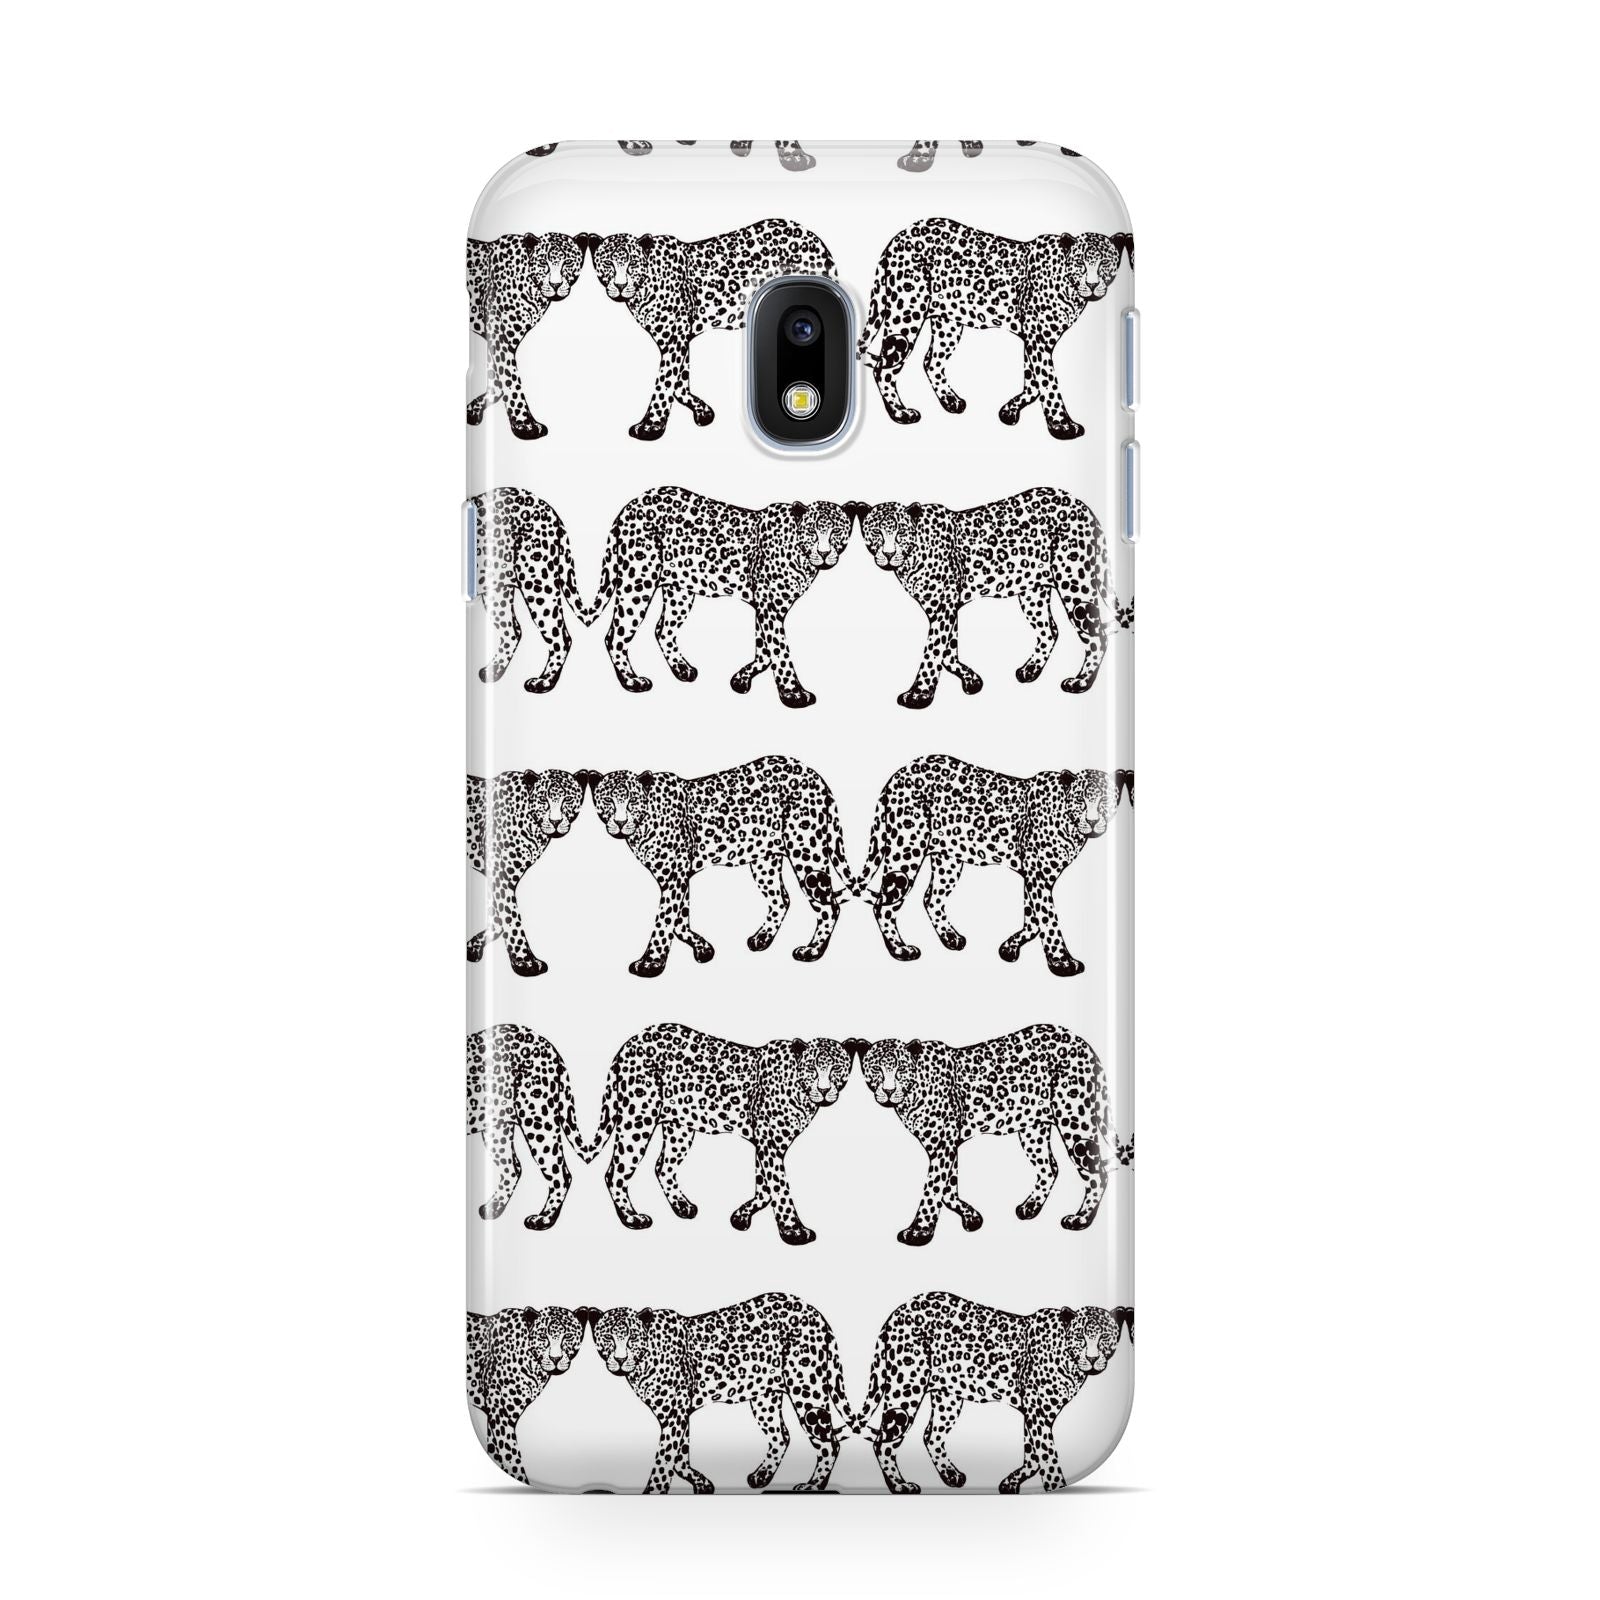 Monochrome Mirrored Leopard Print Samsung Galaxy J3 2017 Case